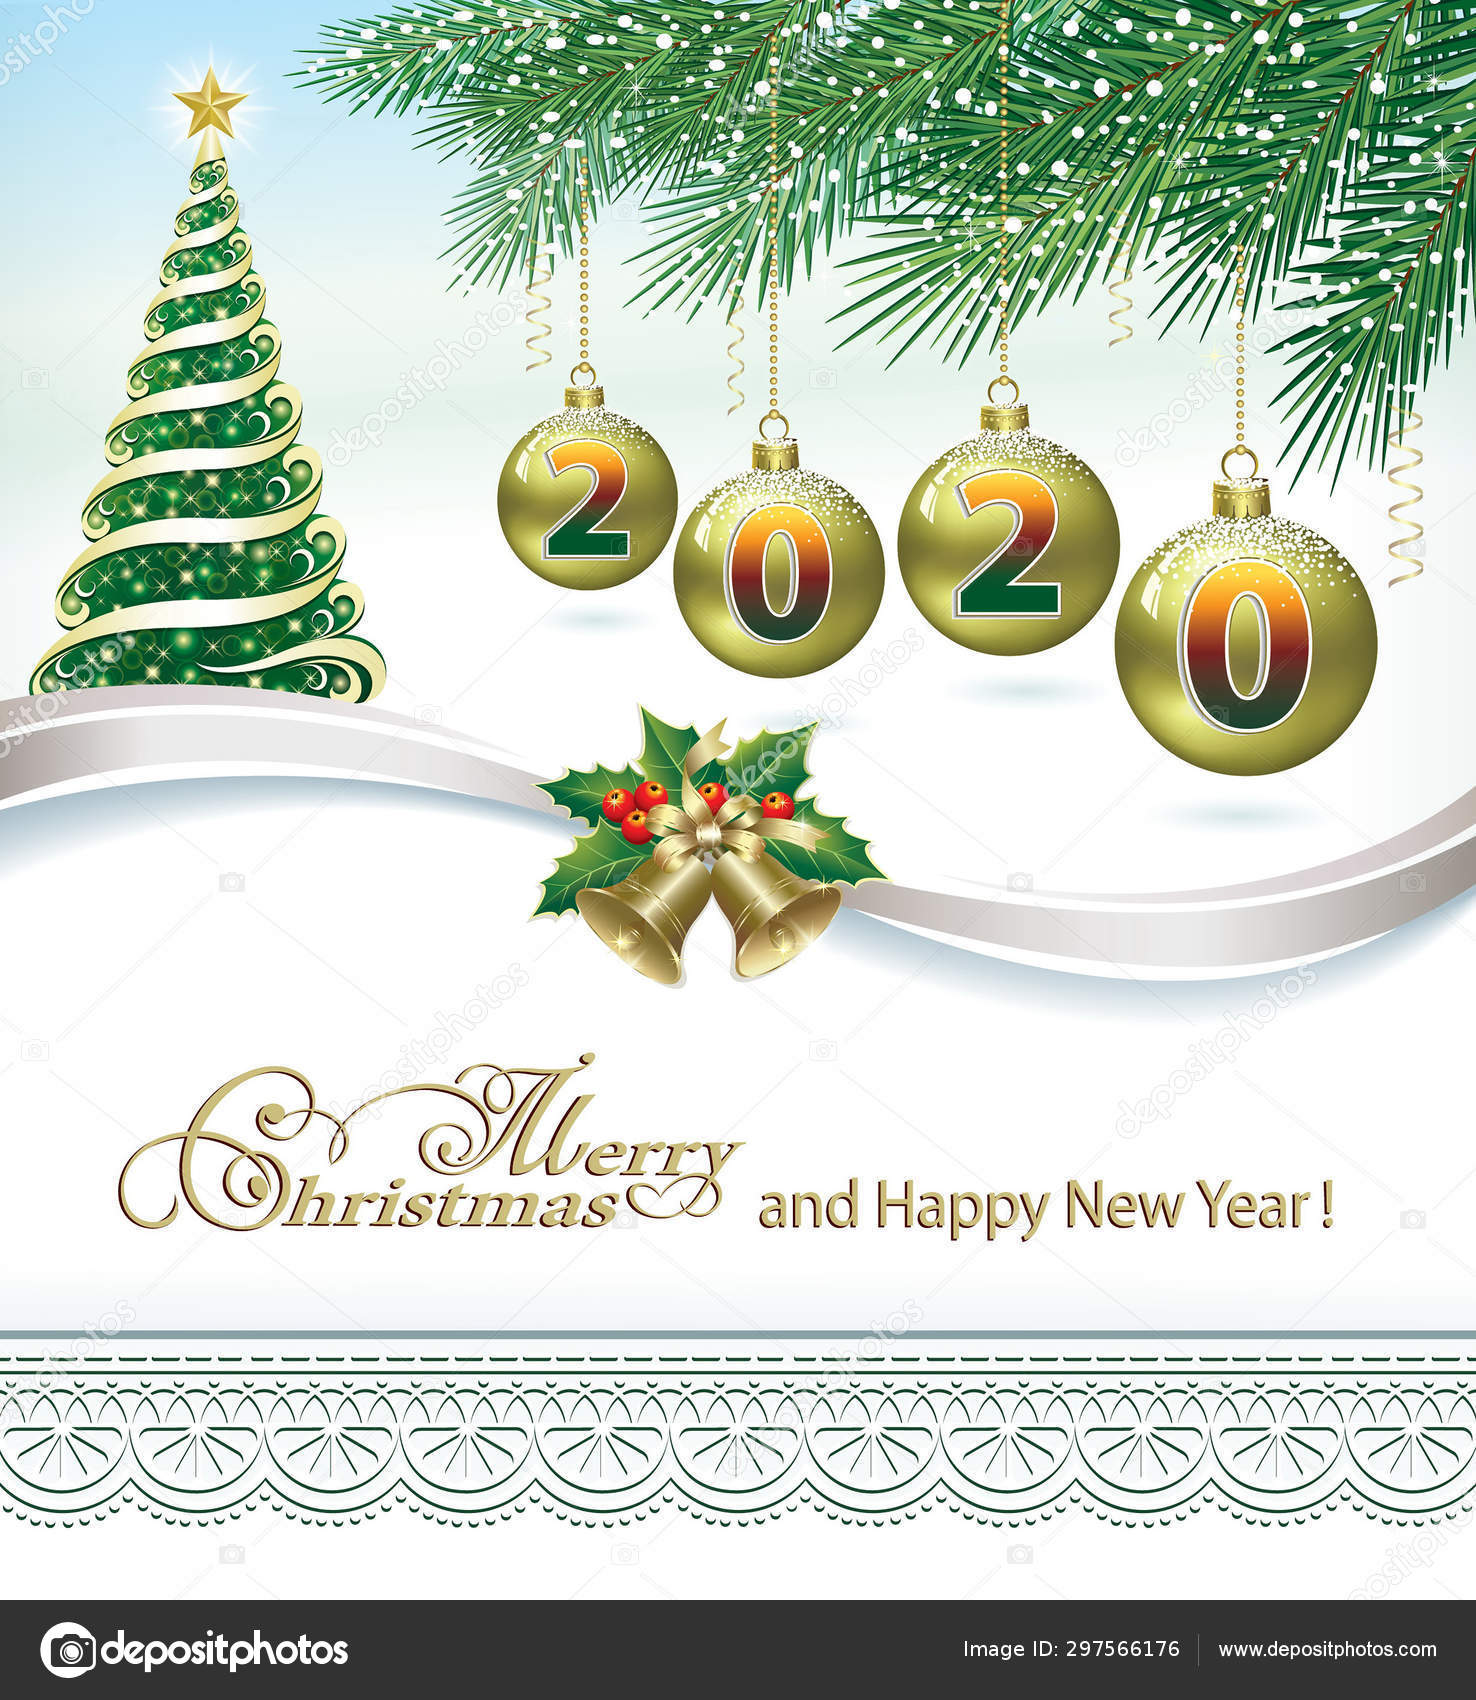 Natale 2020.Merry Christmast And Happy New Year 2020 Christmas Tree Stock Vector C Seriga 297566176